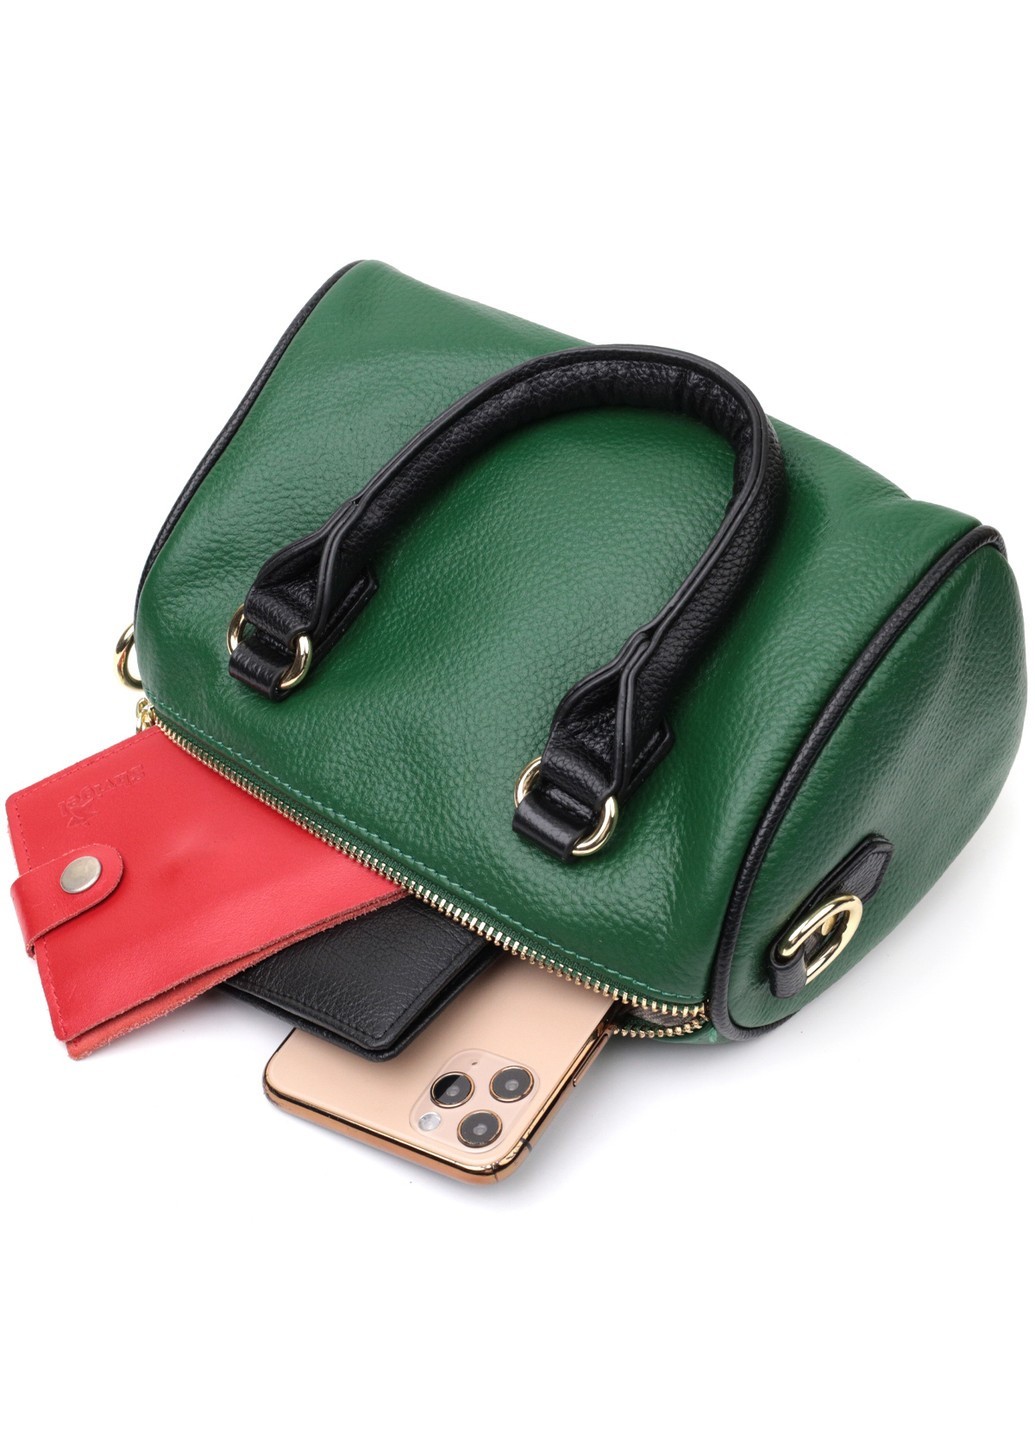 Кожаная сумка бочонок с темными акцентами 22351 Зеленая Vintage (276461828)